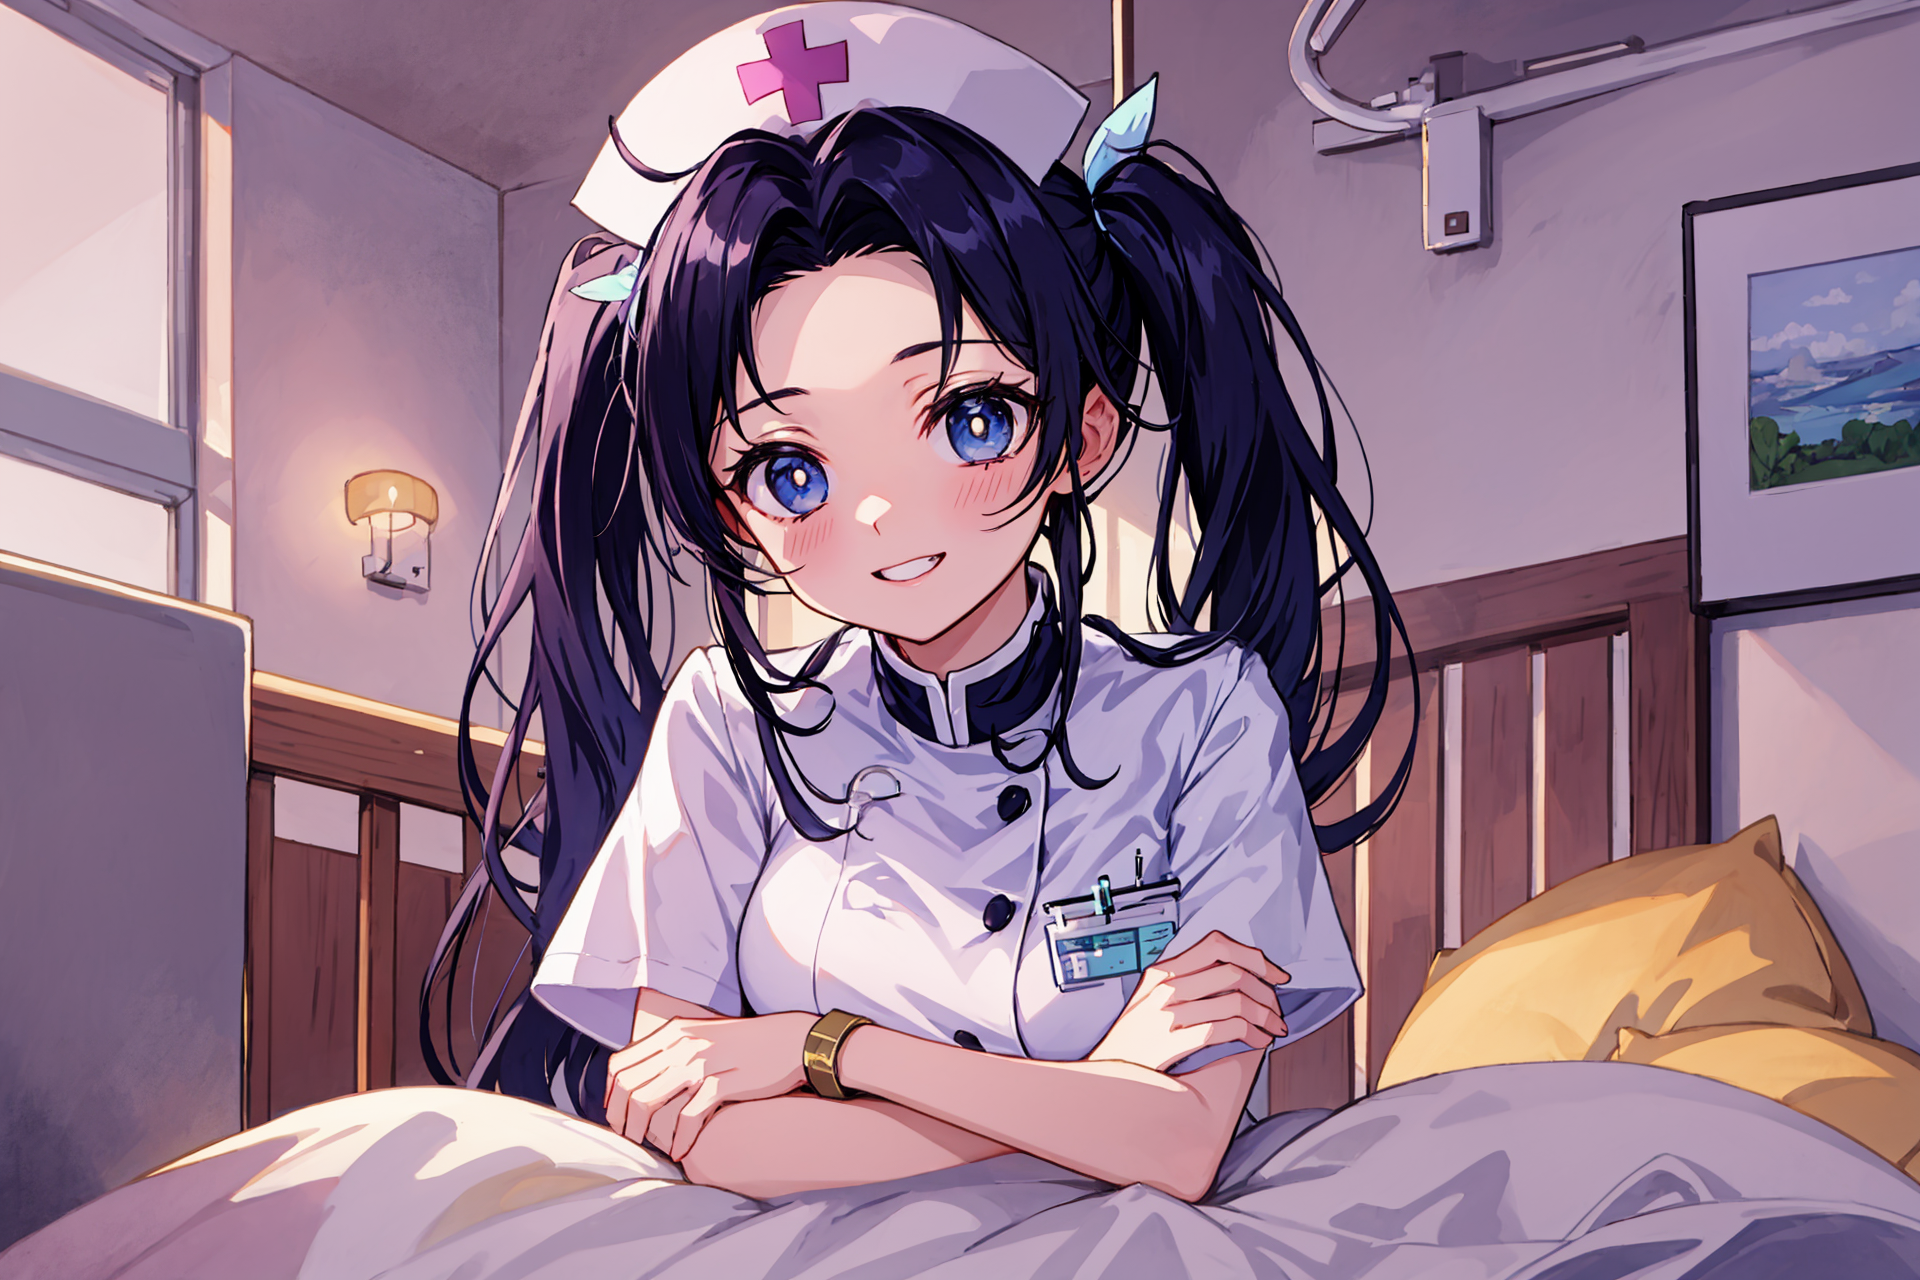 Anime 1920x1280 anime anime girls Kimetsu no Yaiba AI art twintails blushing blue hair nurses nurse outfit arms crossed Kanzaki aoi smiling looking at viewer long hair